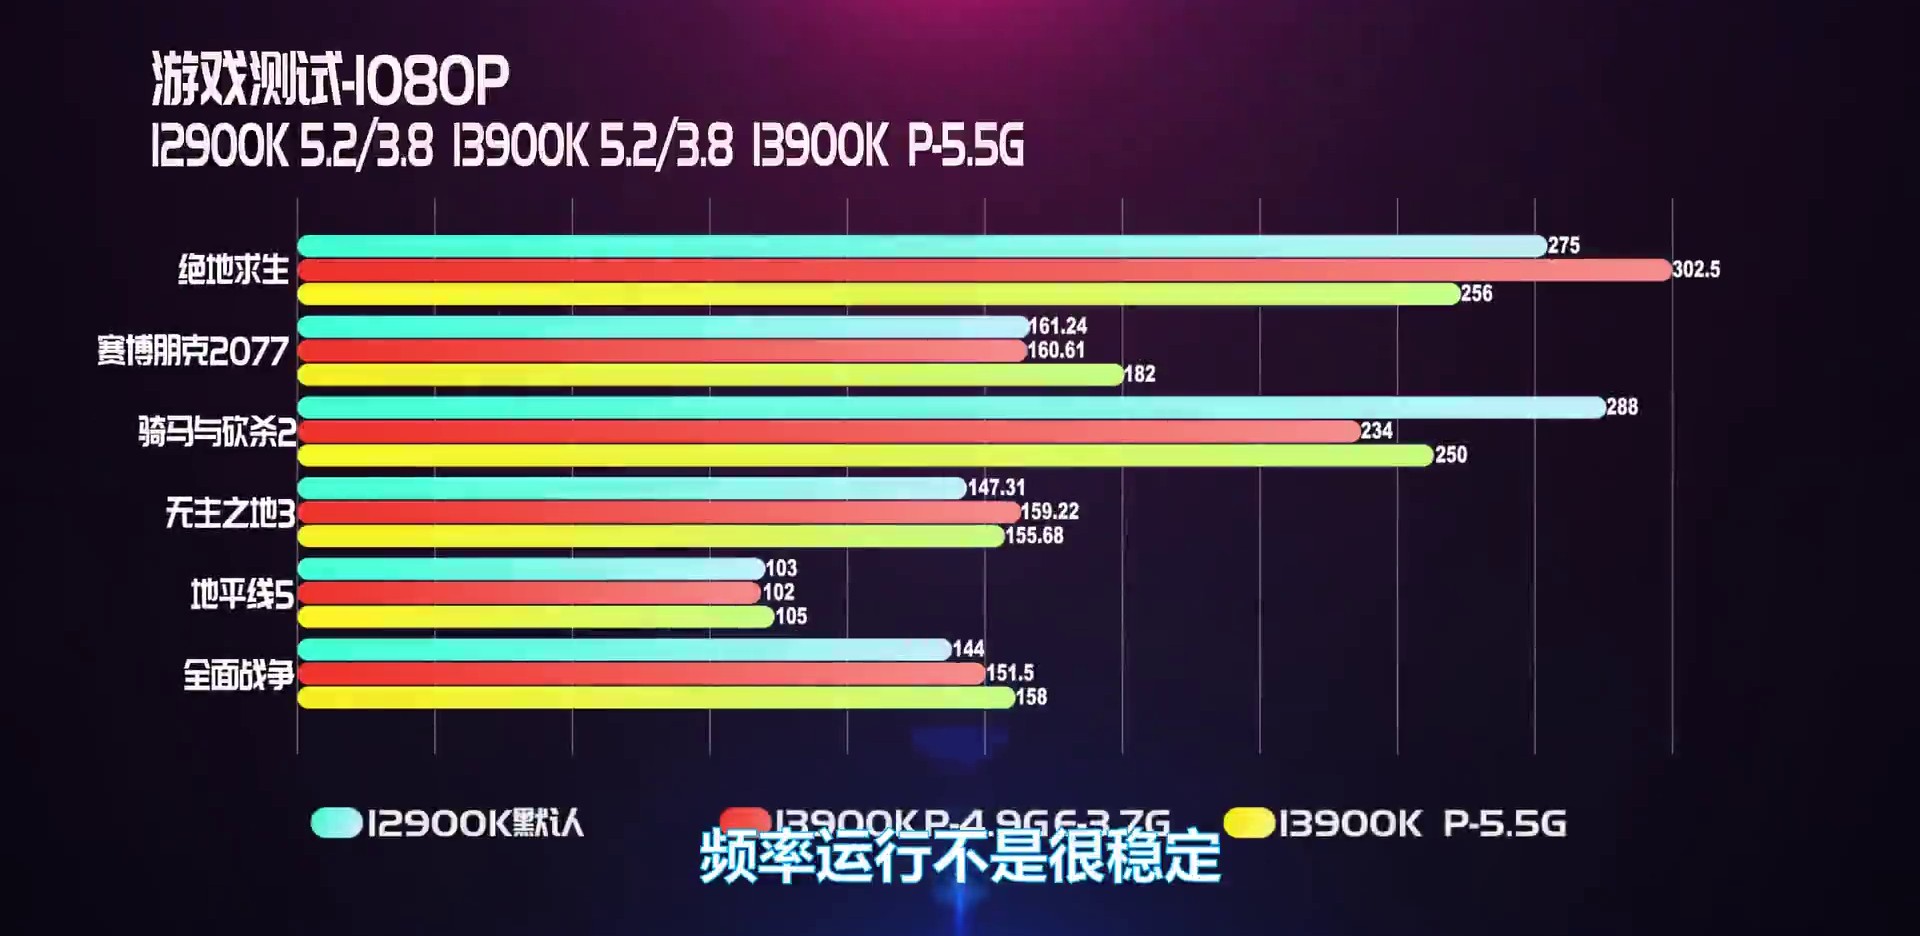 Intel Core i9 13900K review